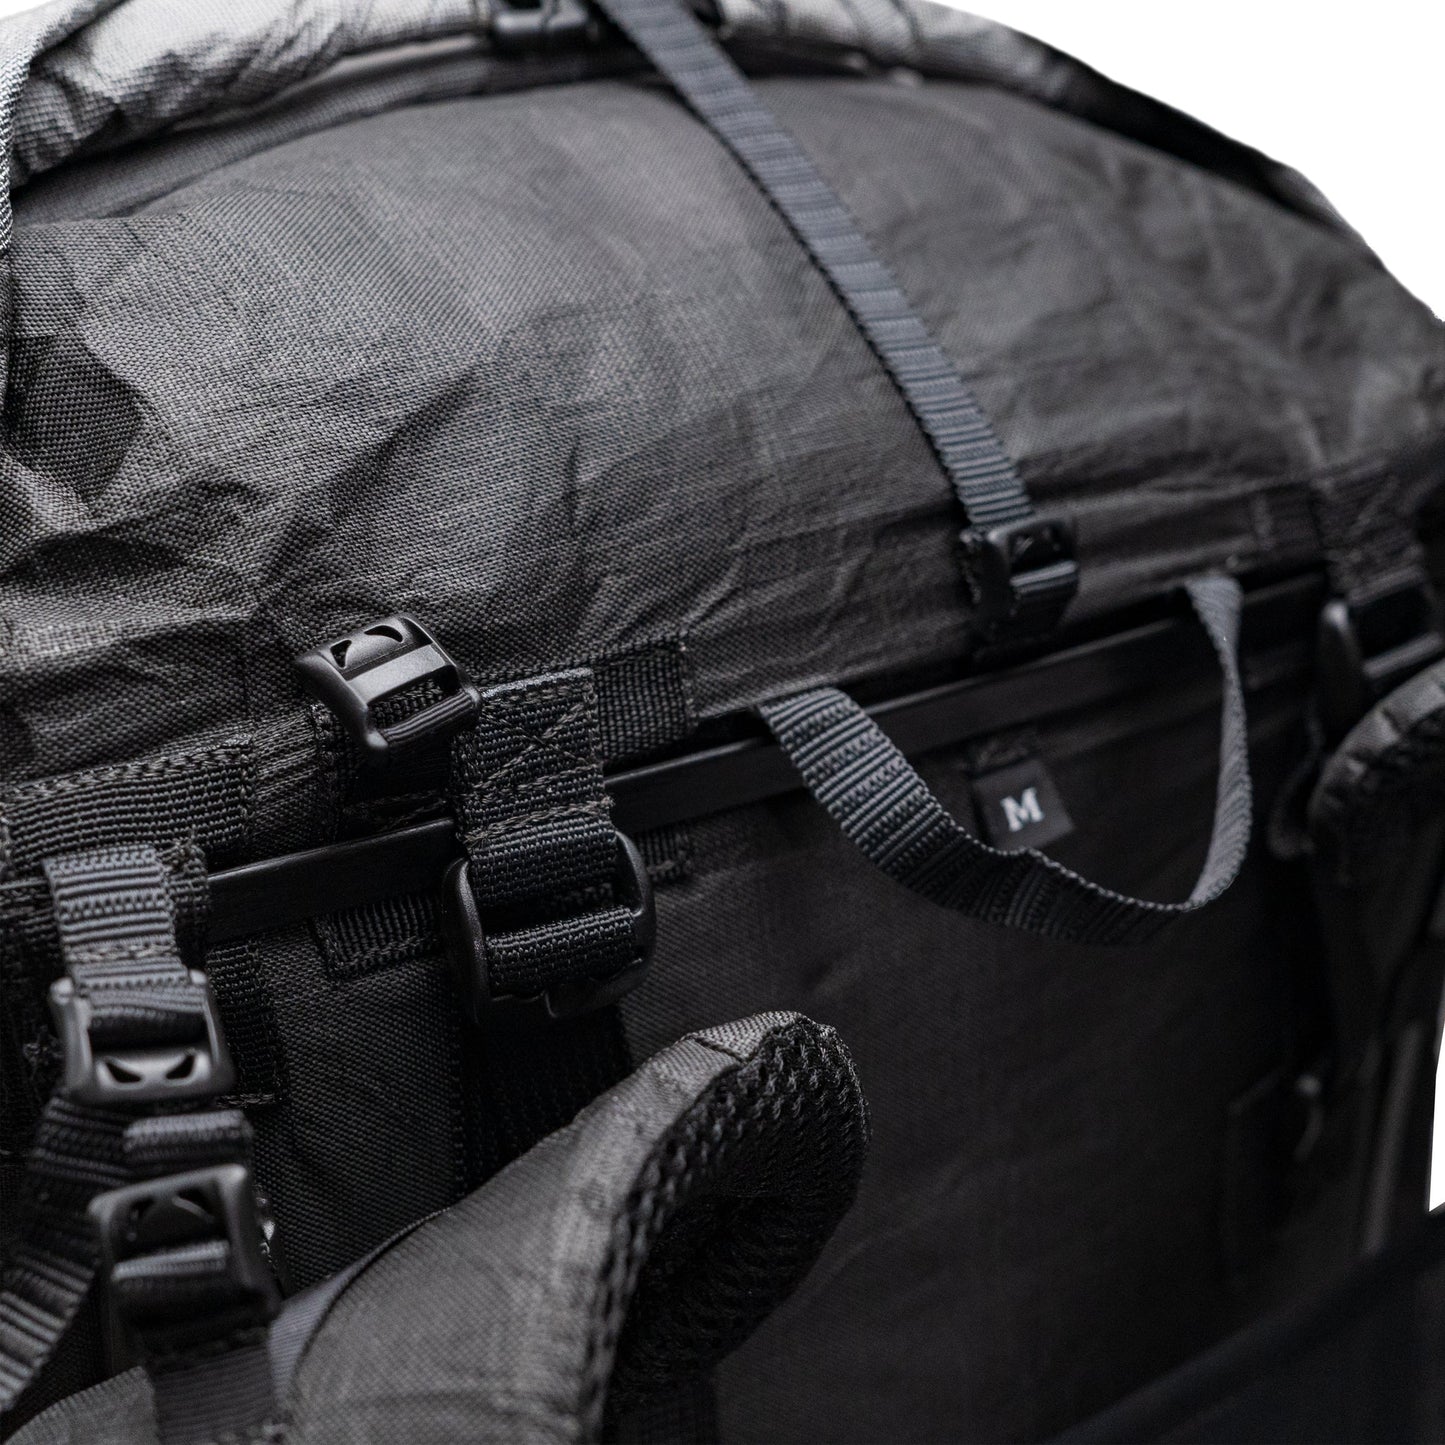 Zpacks - Arc Haul Ultra 70L Backpack